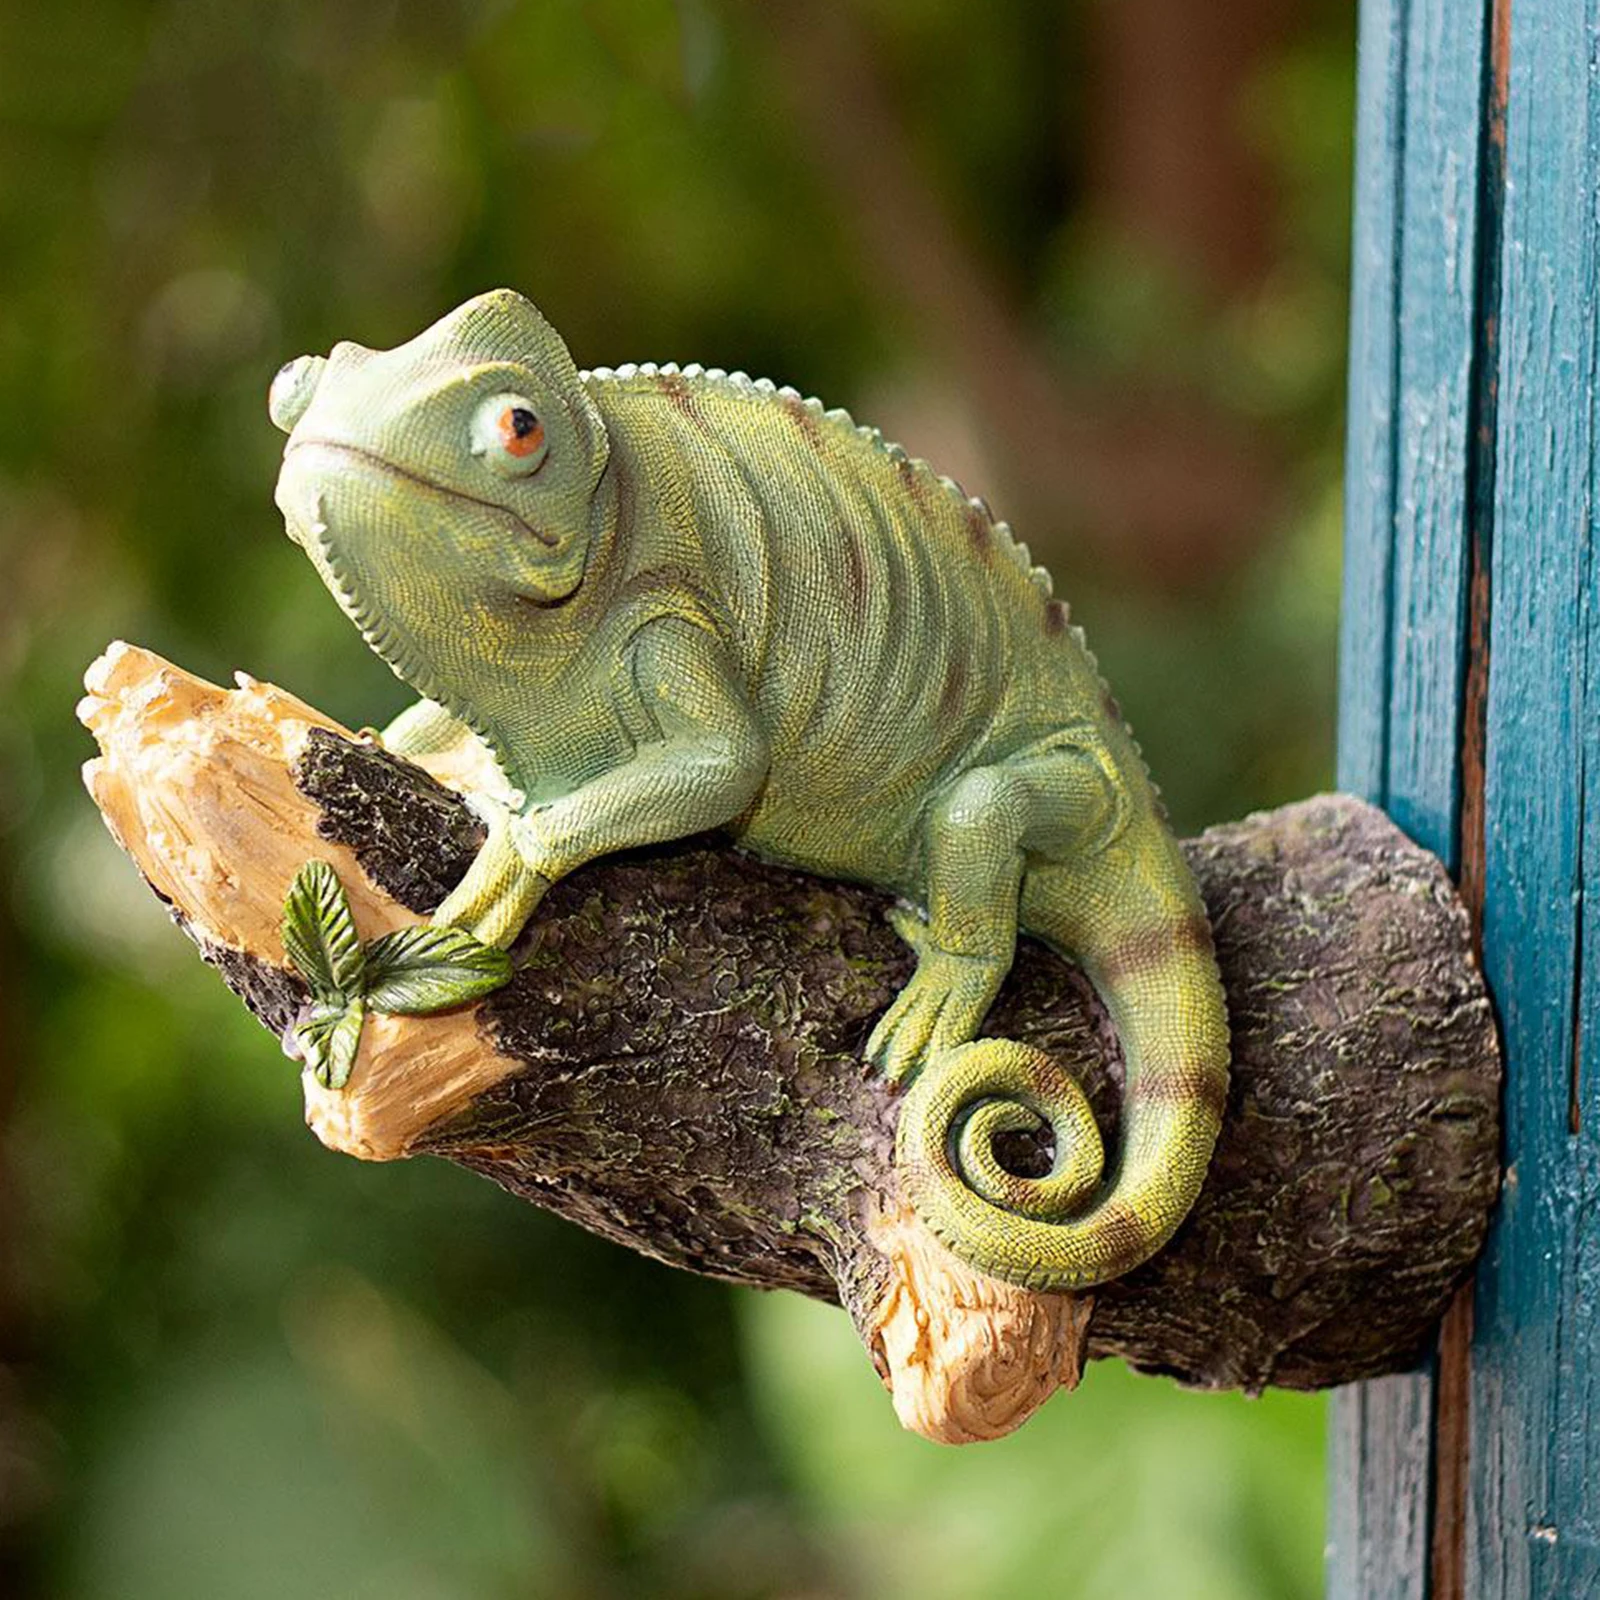 Realistic Chameleon Lizard Sculpture Resin Figurine Garden Decor Home Office Ornament Wall Hanging